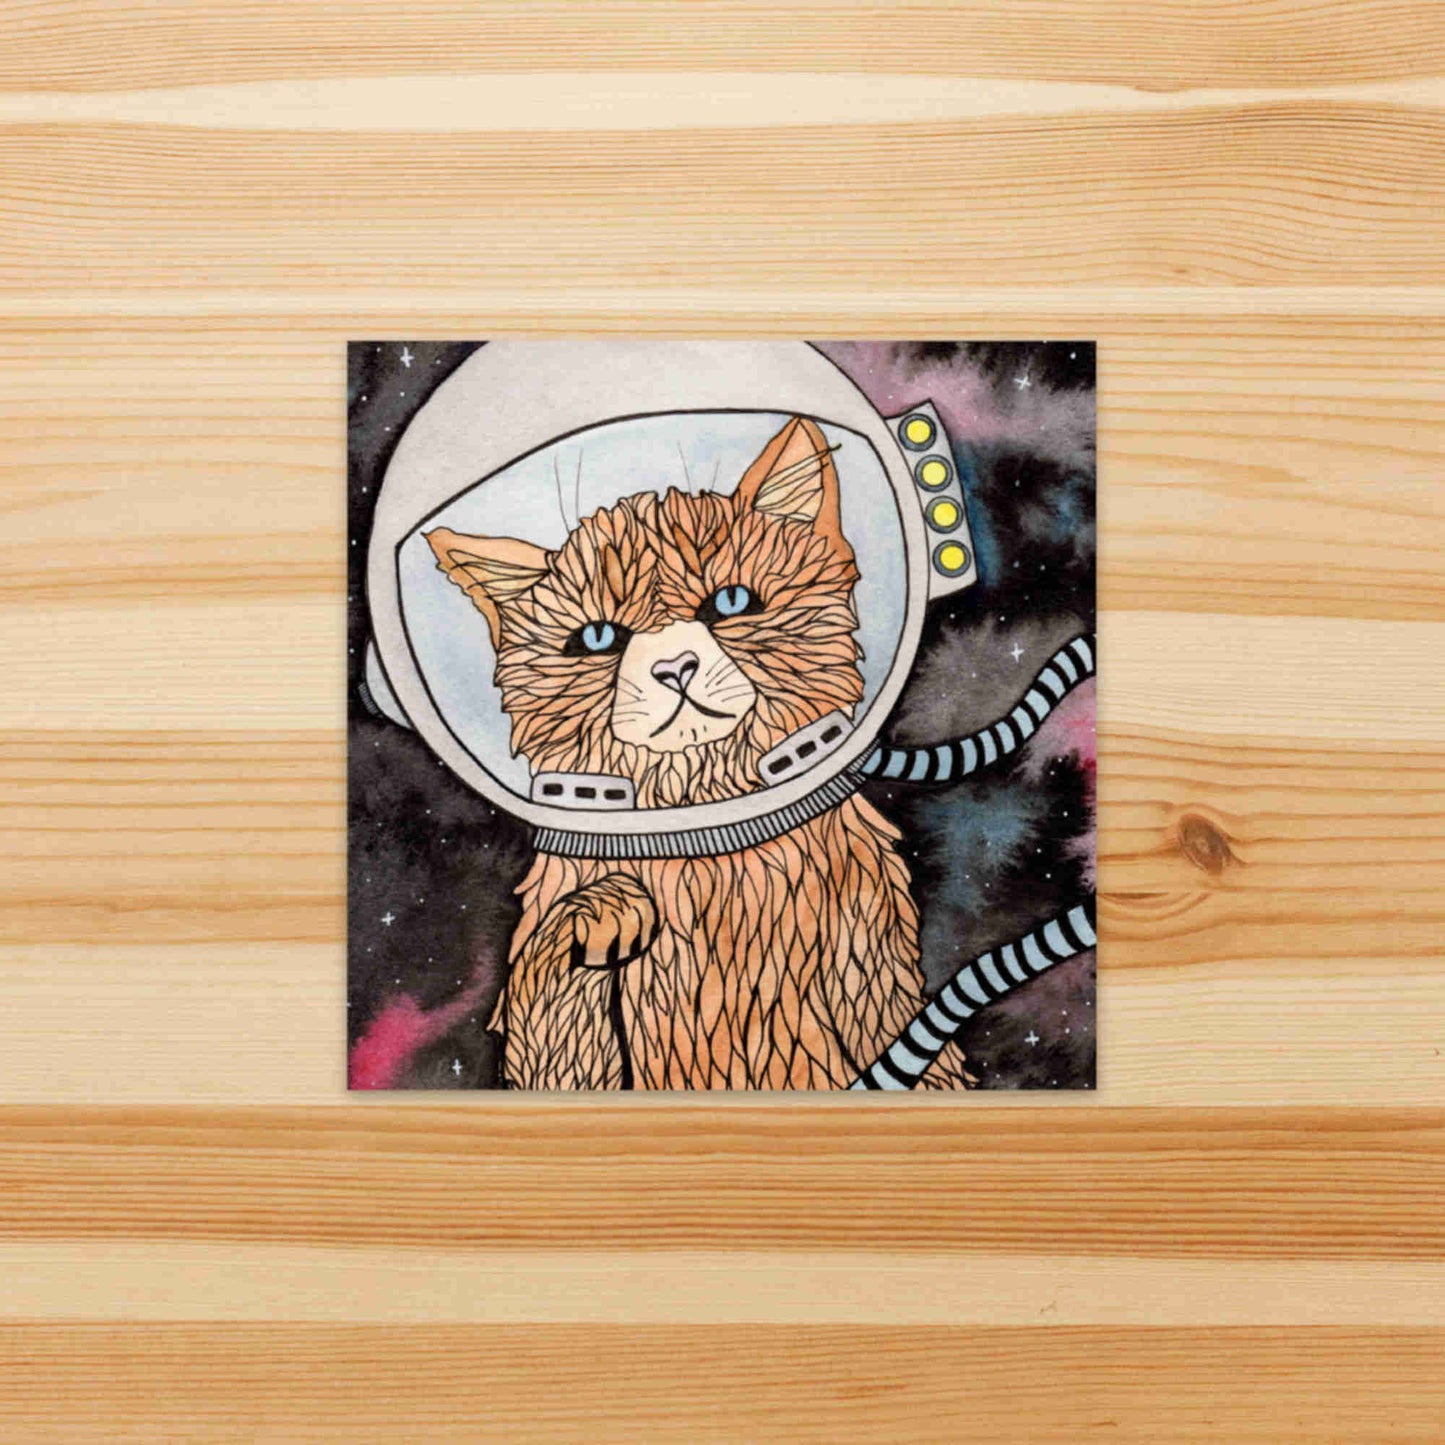 PinkPolish Design Stickers "Space Kitty" Square Vinyl Sticker